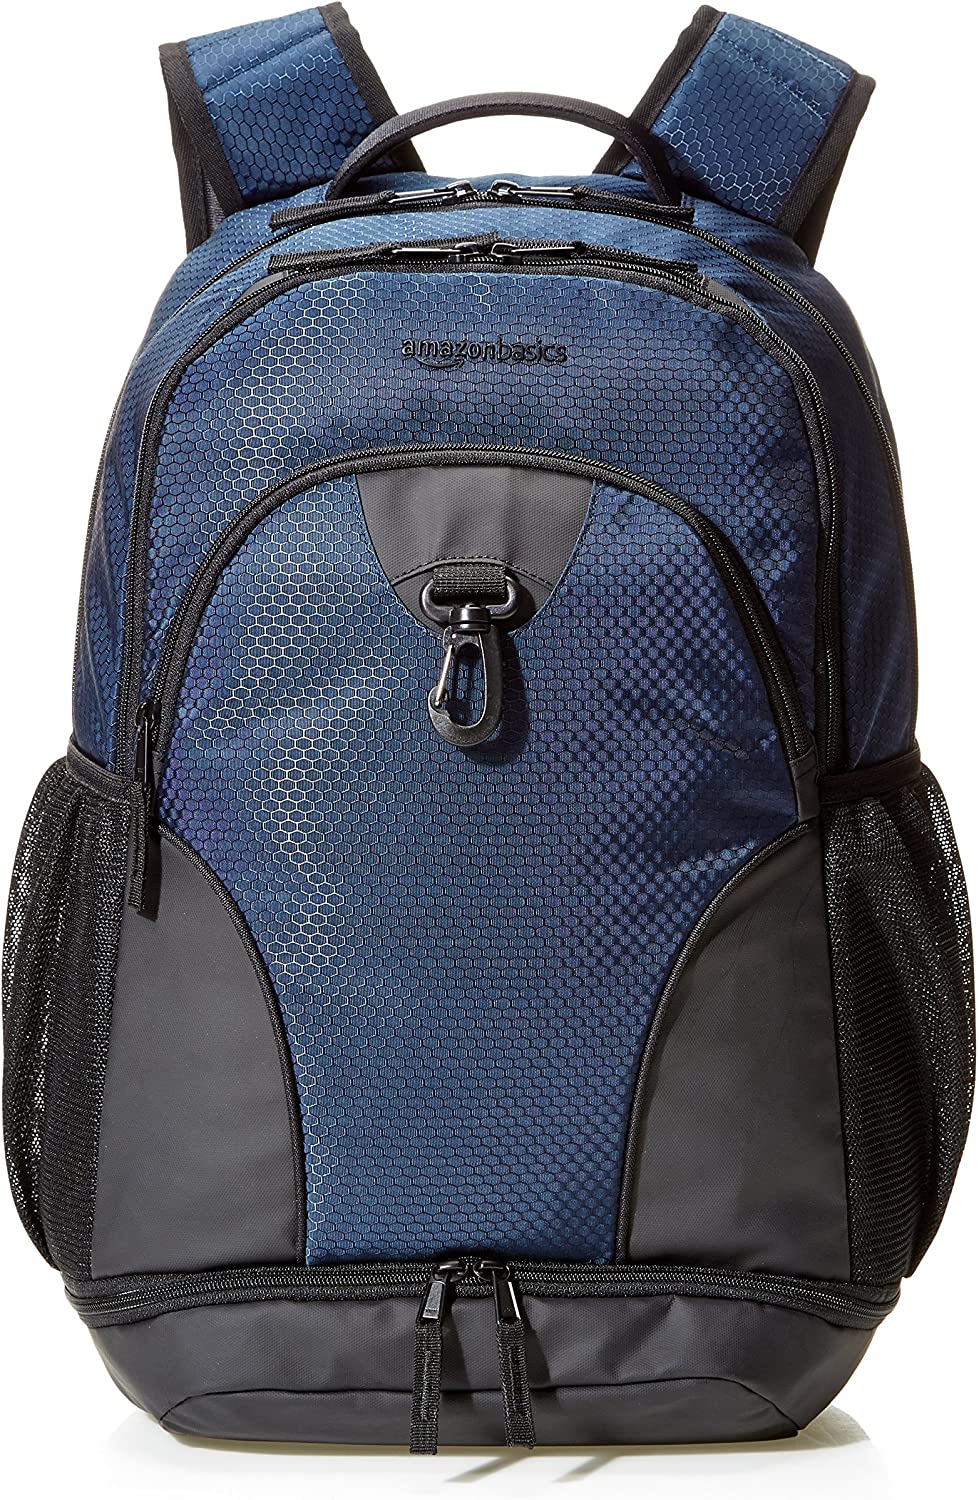 Amazon Basics Sport Laptop Backpack - Navy Blue